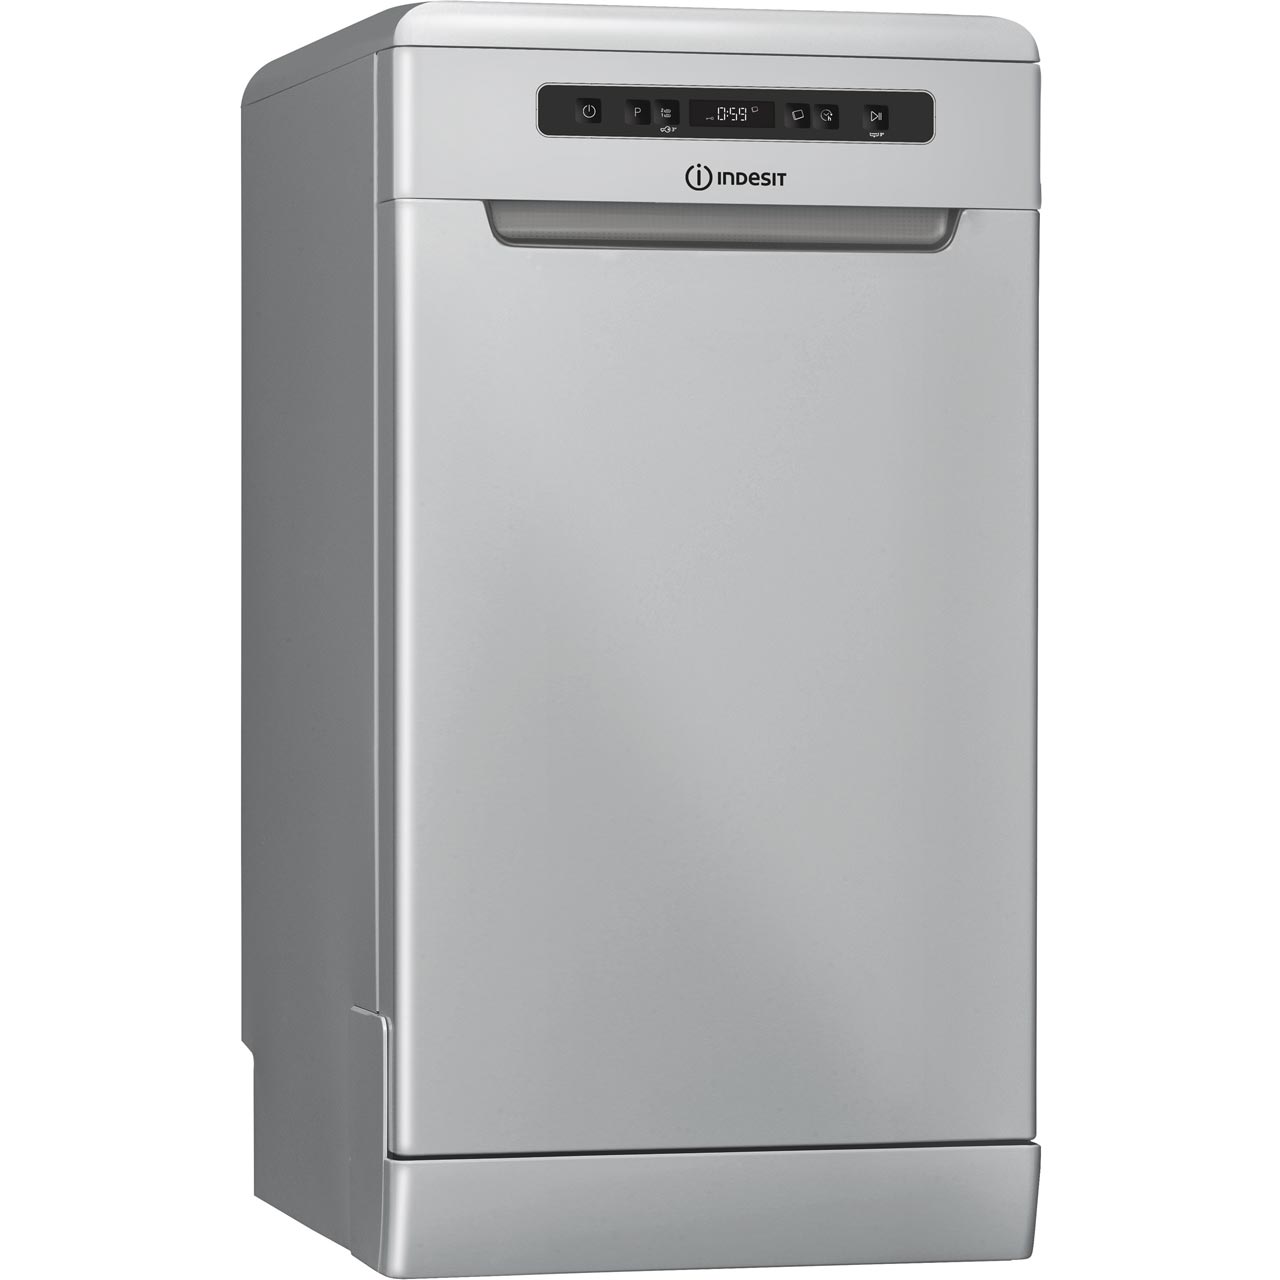 Indesit DSFC3M19SUK Slimline Dishwasher Review